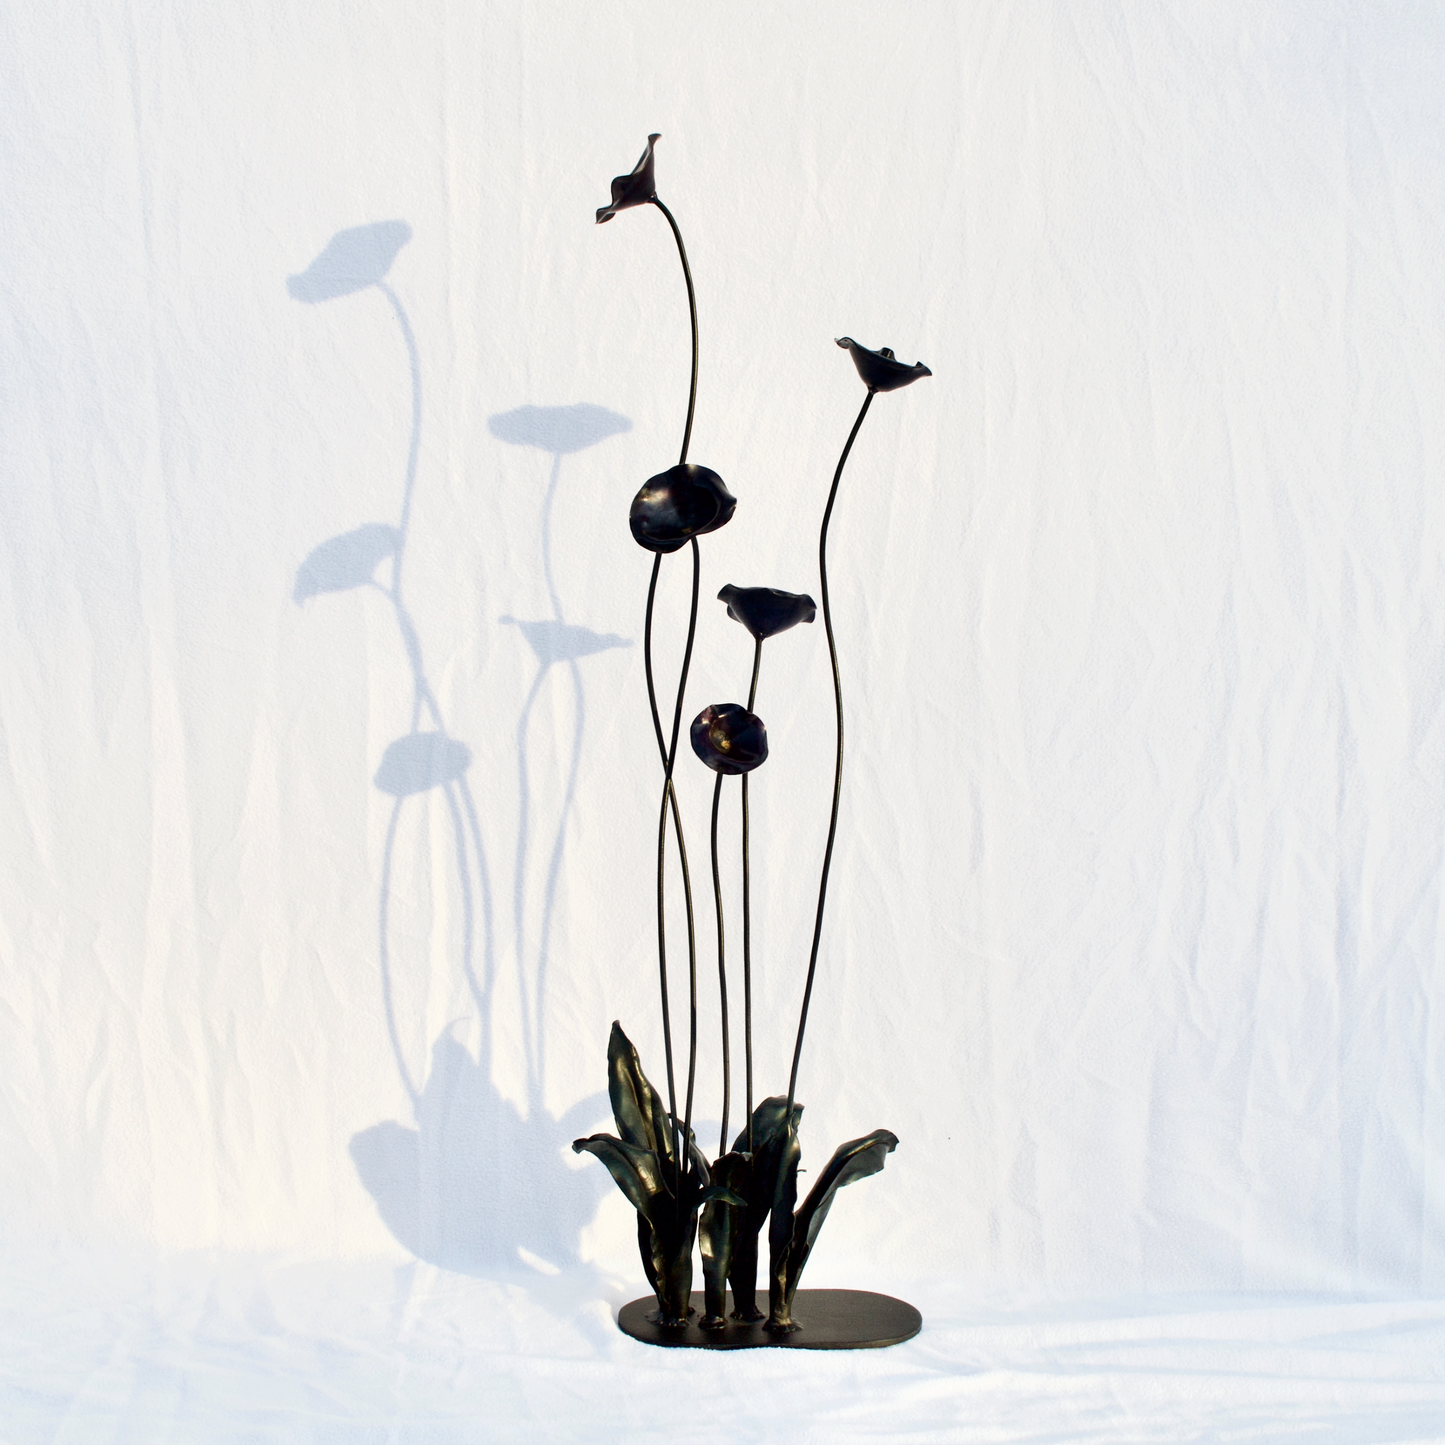 Organic forgesd steel poppy sculpture. 36" tall